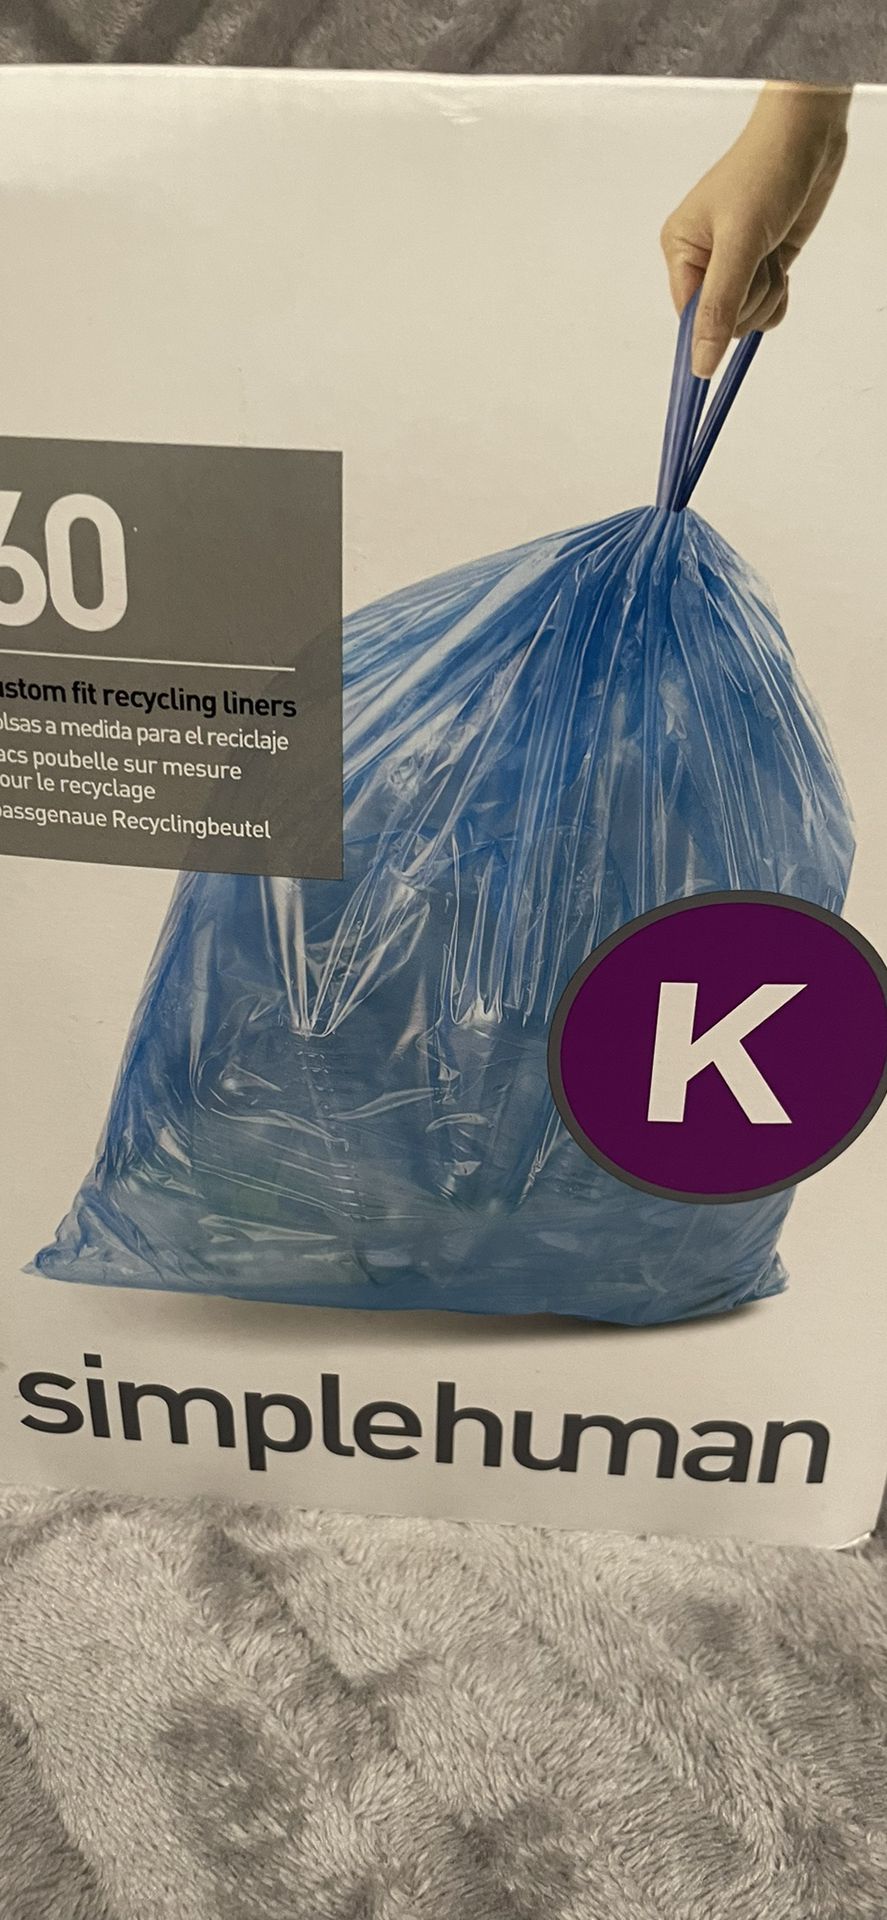 simplehuman Code K Custom Fit Drawstring Trash Bags in Dispenser Packs, 60 Count, 35-45 Liter / 9.2-12 Gallon, Blue